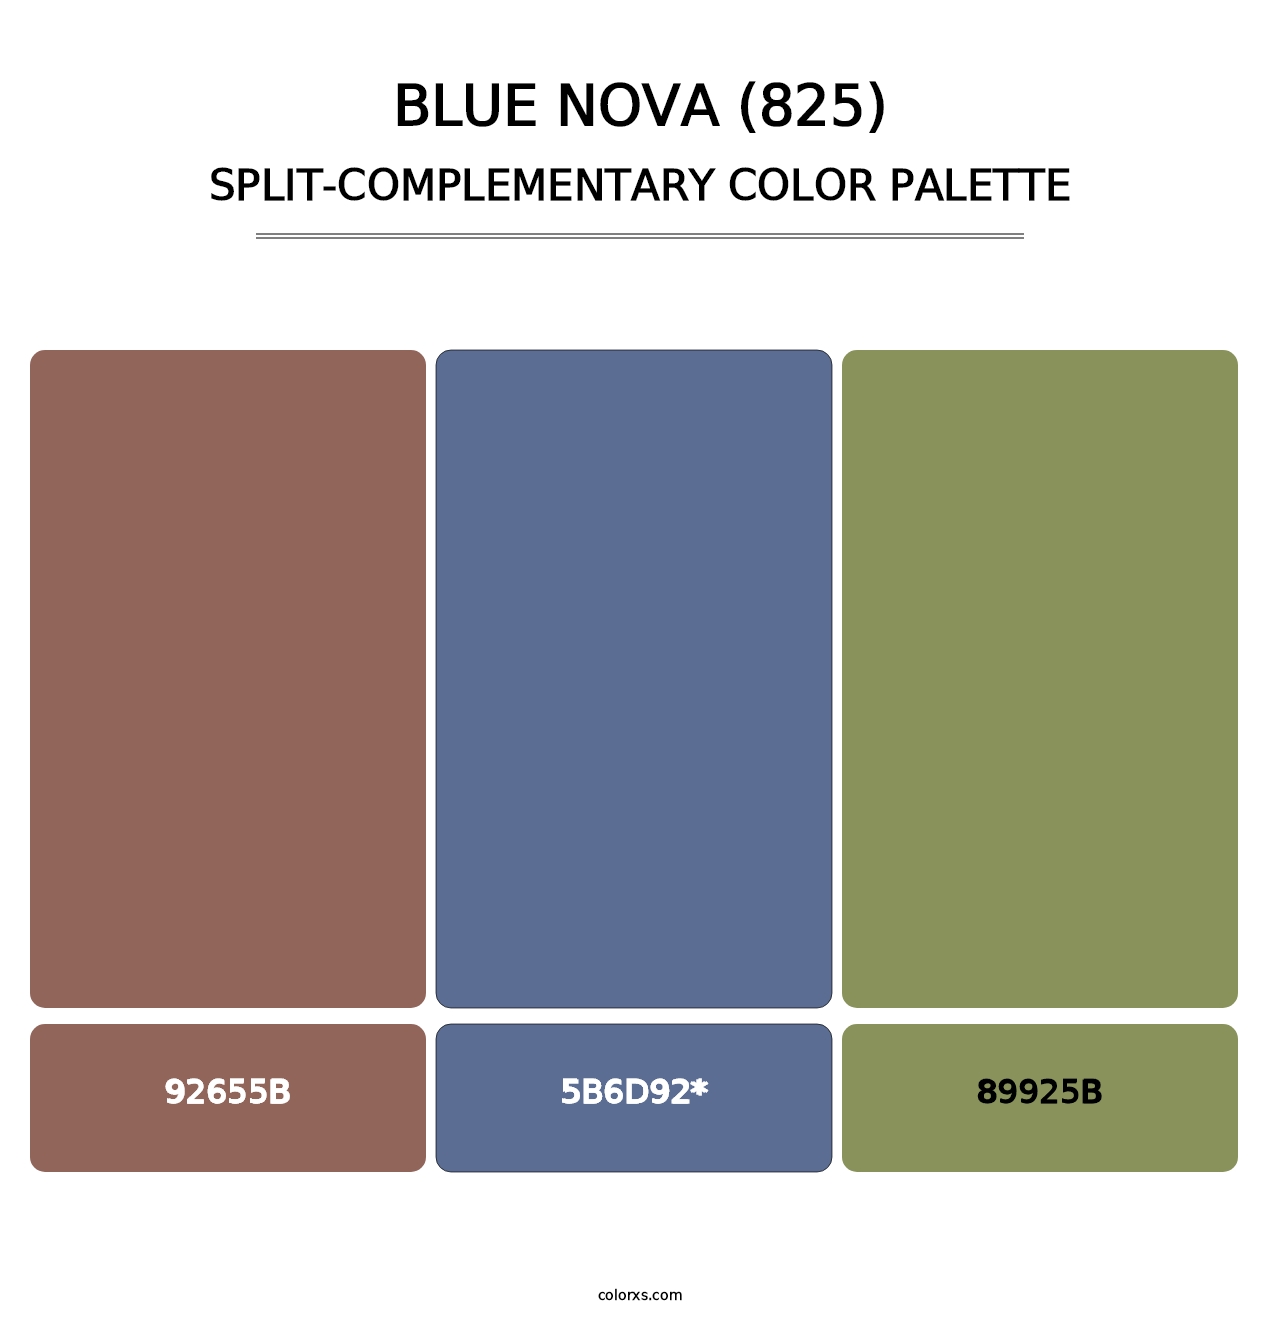 Blue Nova (825) - Split-Complementary Color Palette